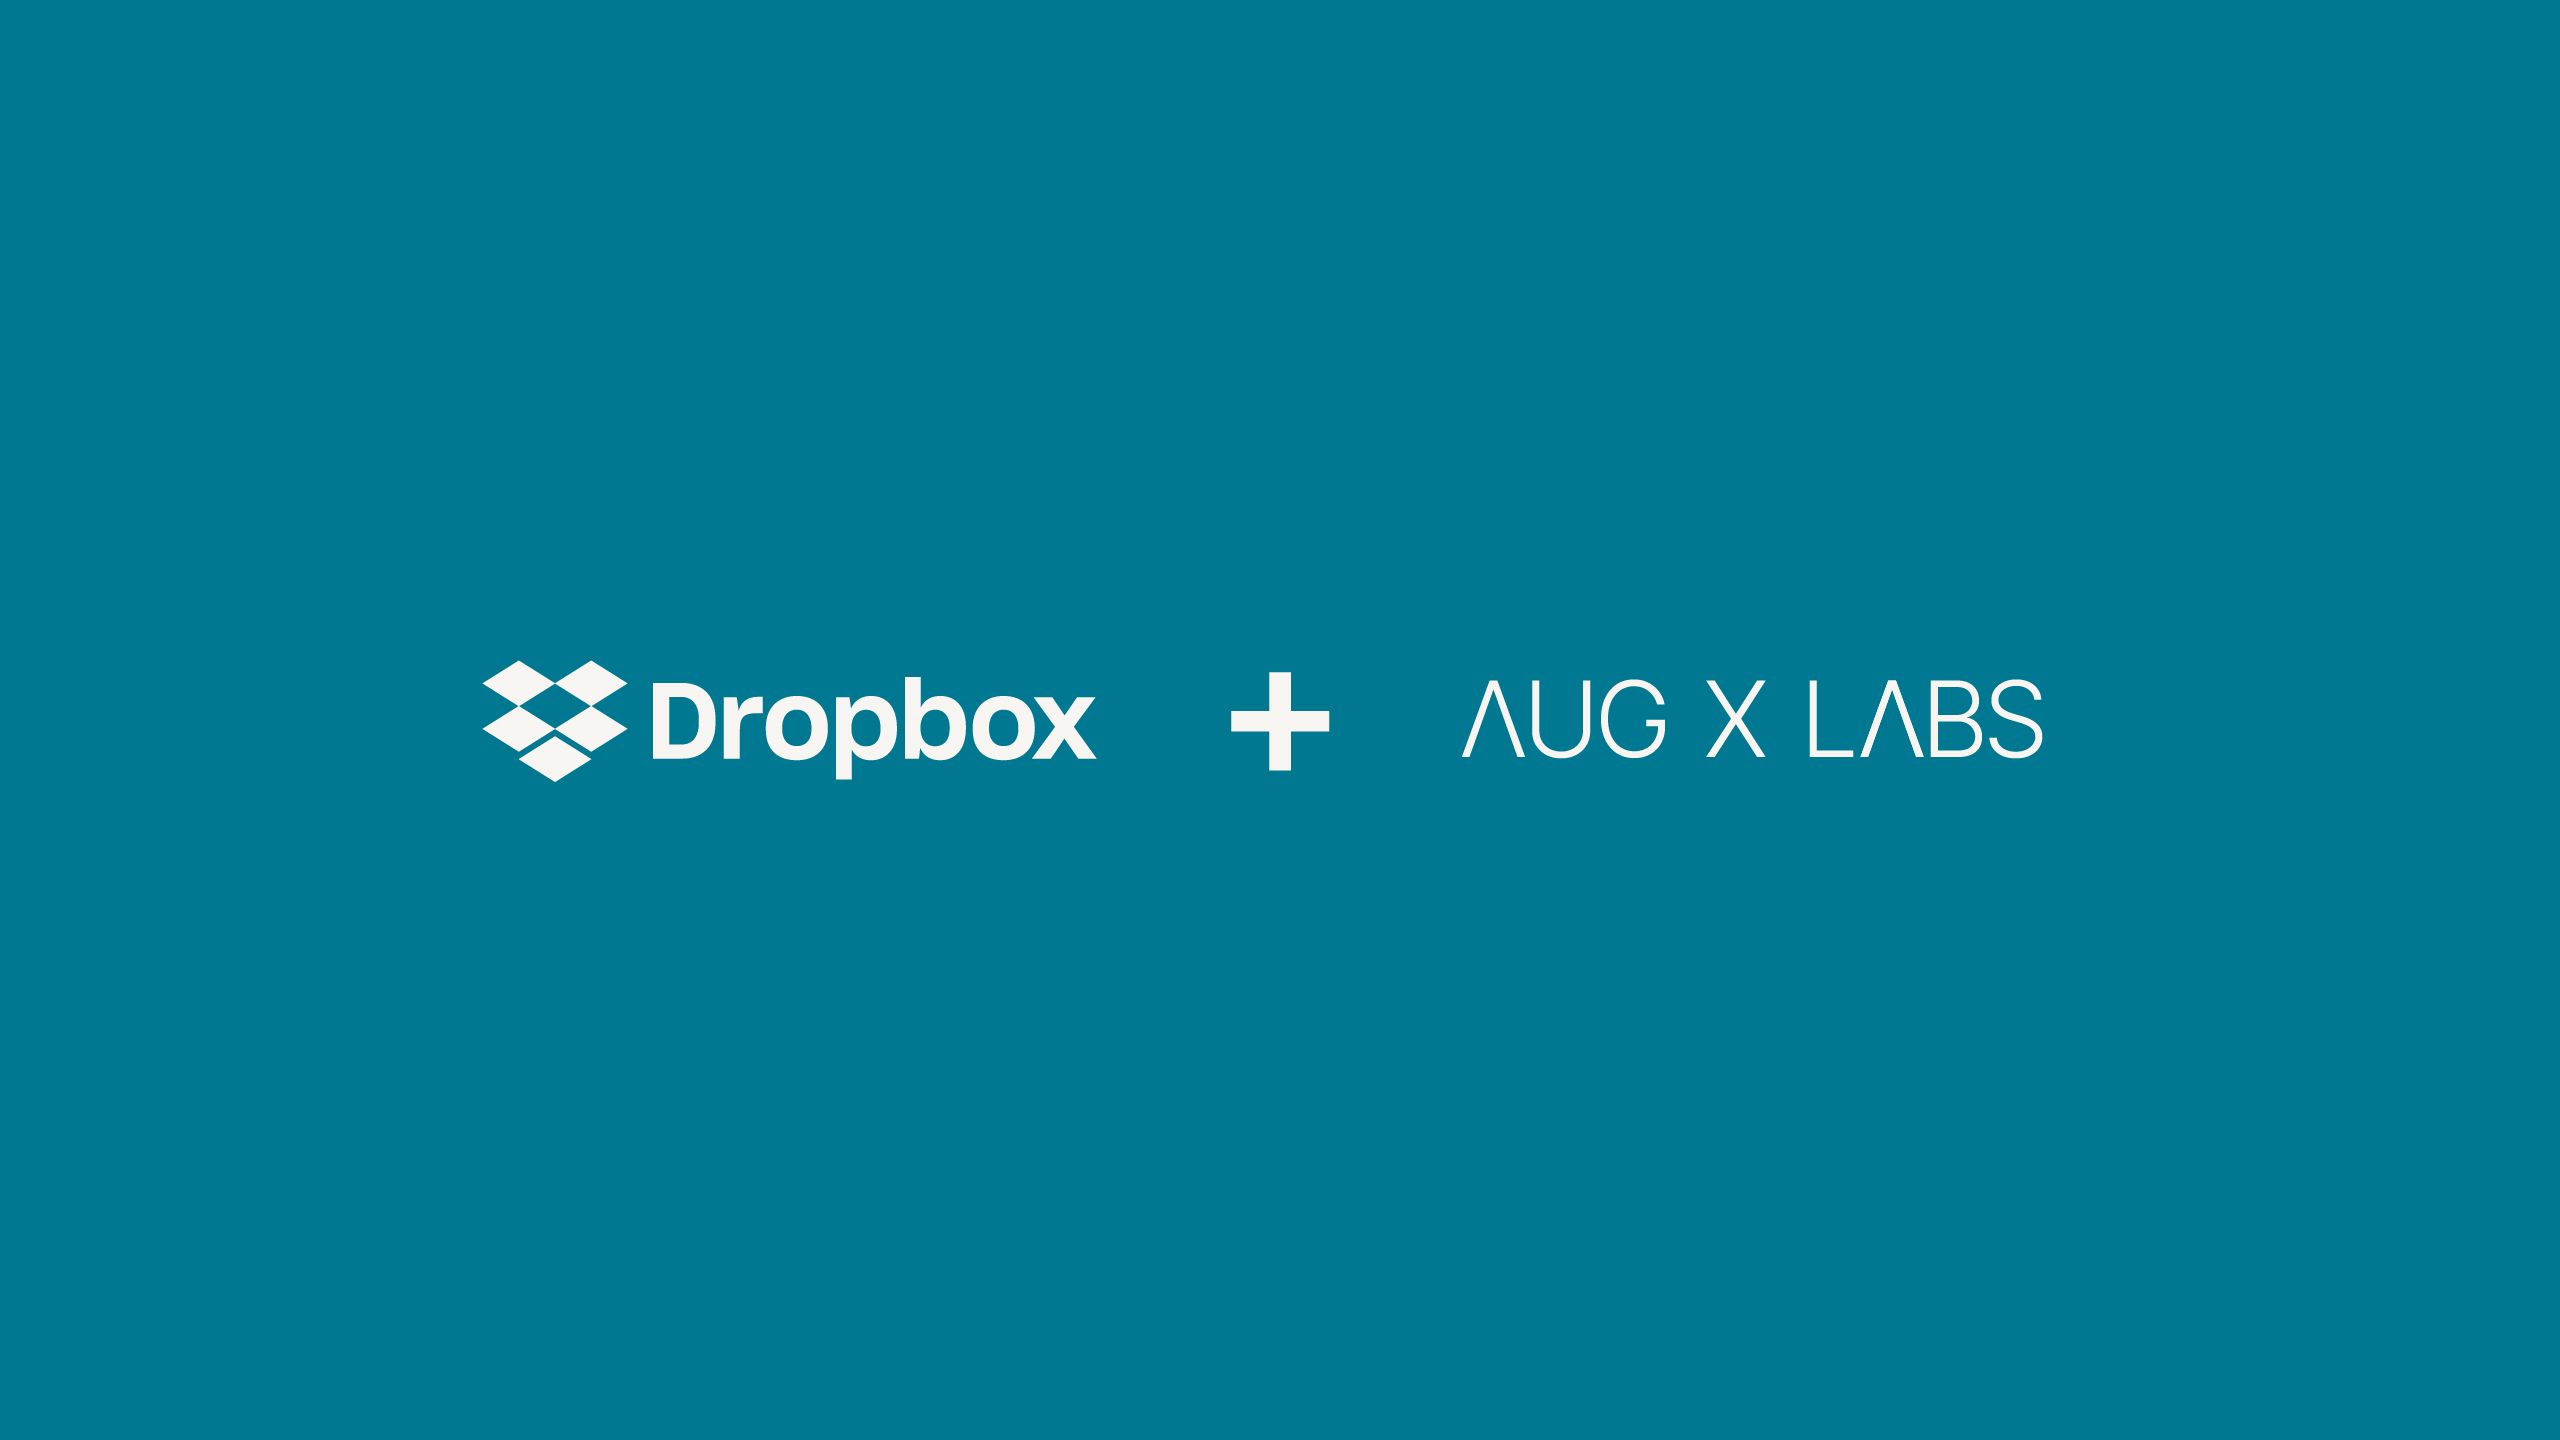 Logo partnerstwa Dropbox i AugX Labs  